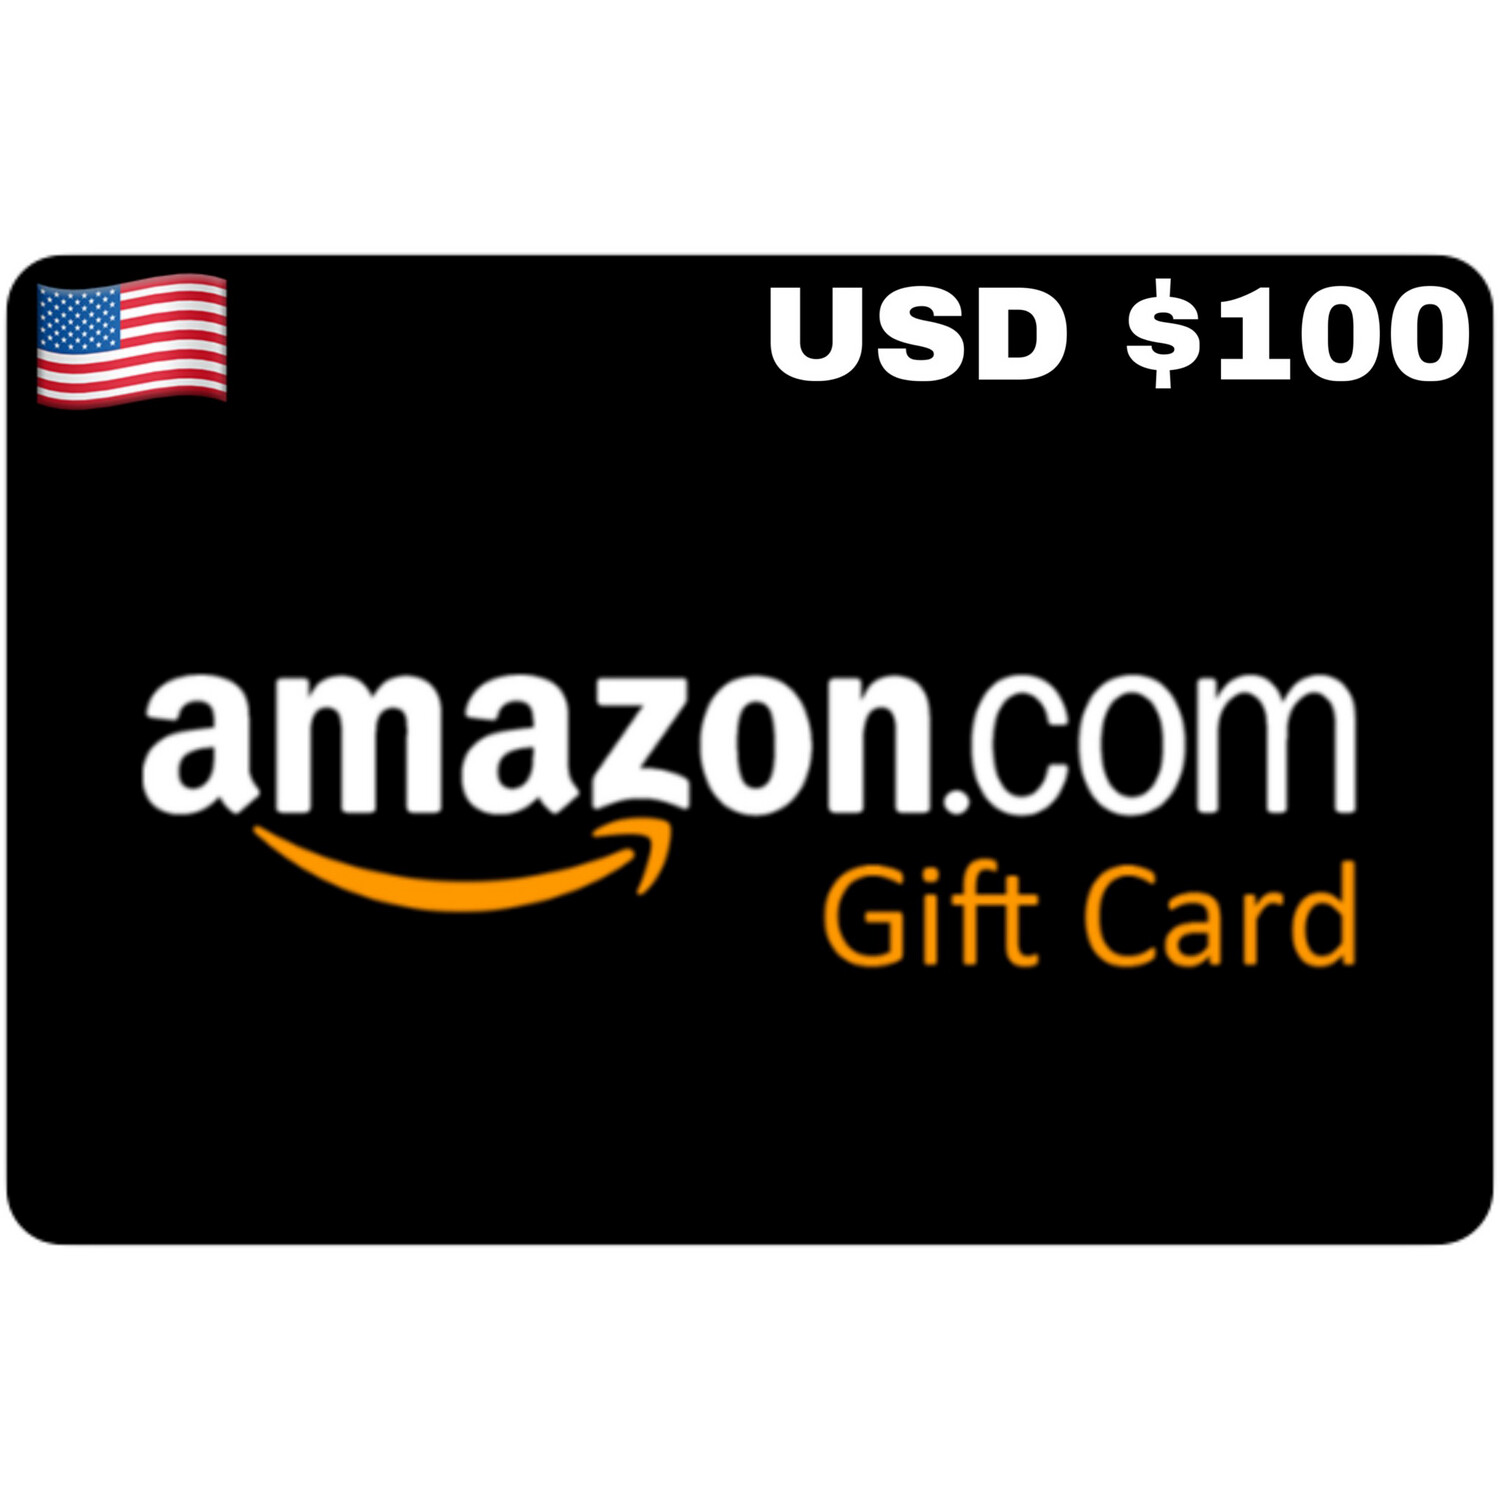 Amazon.com Gift Card USD $100